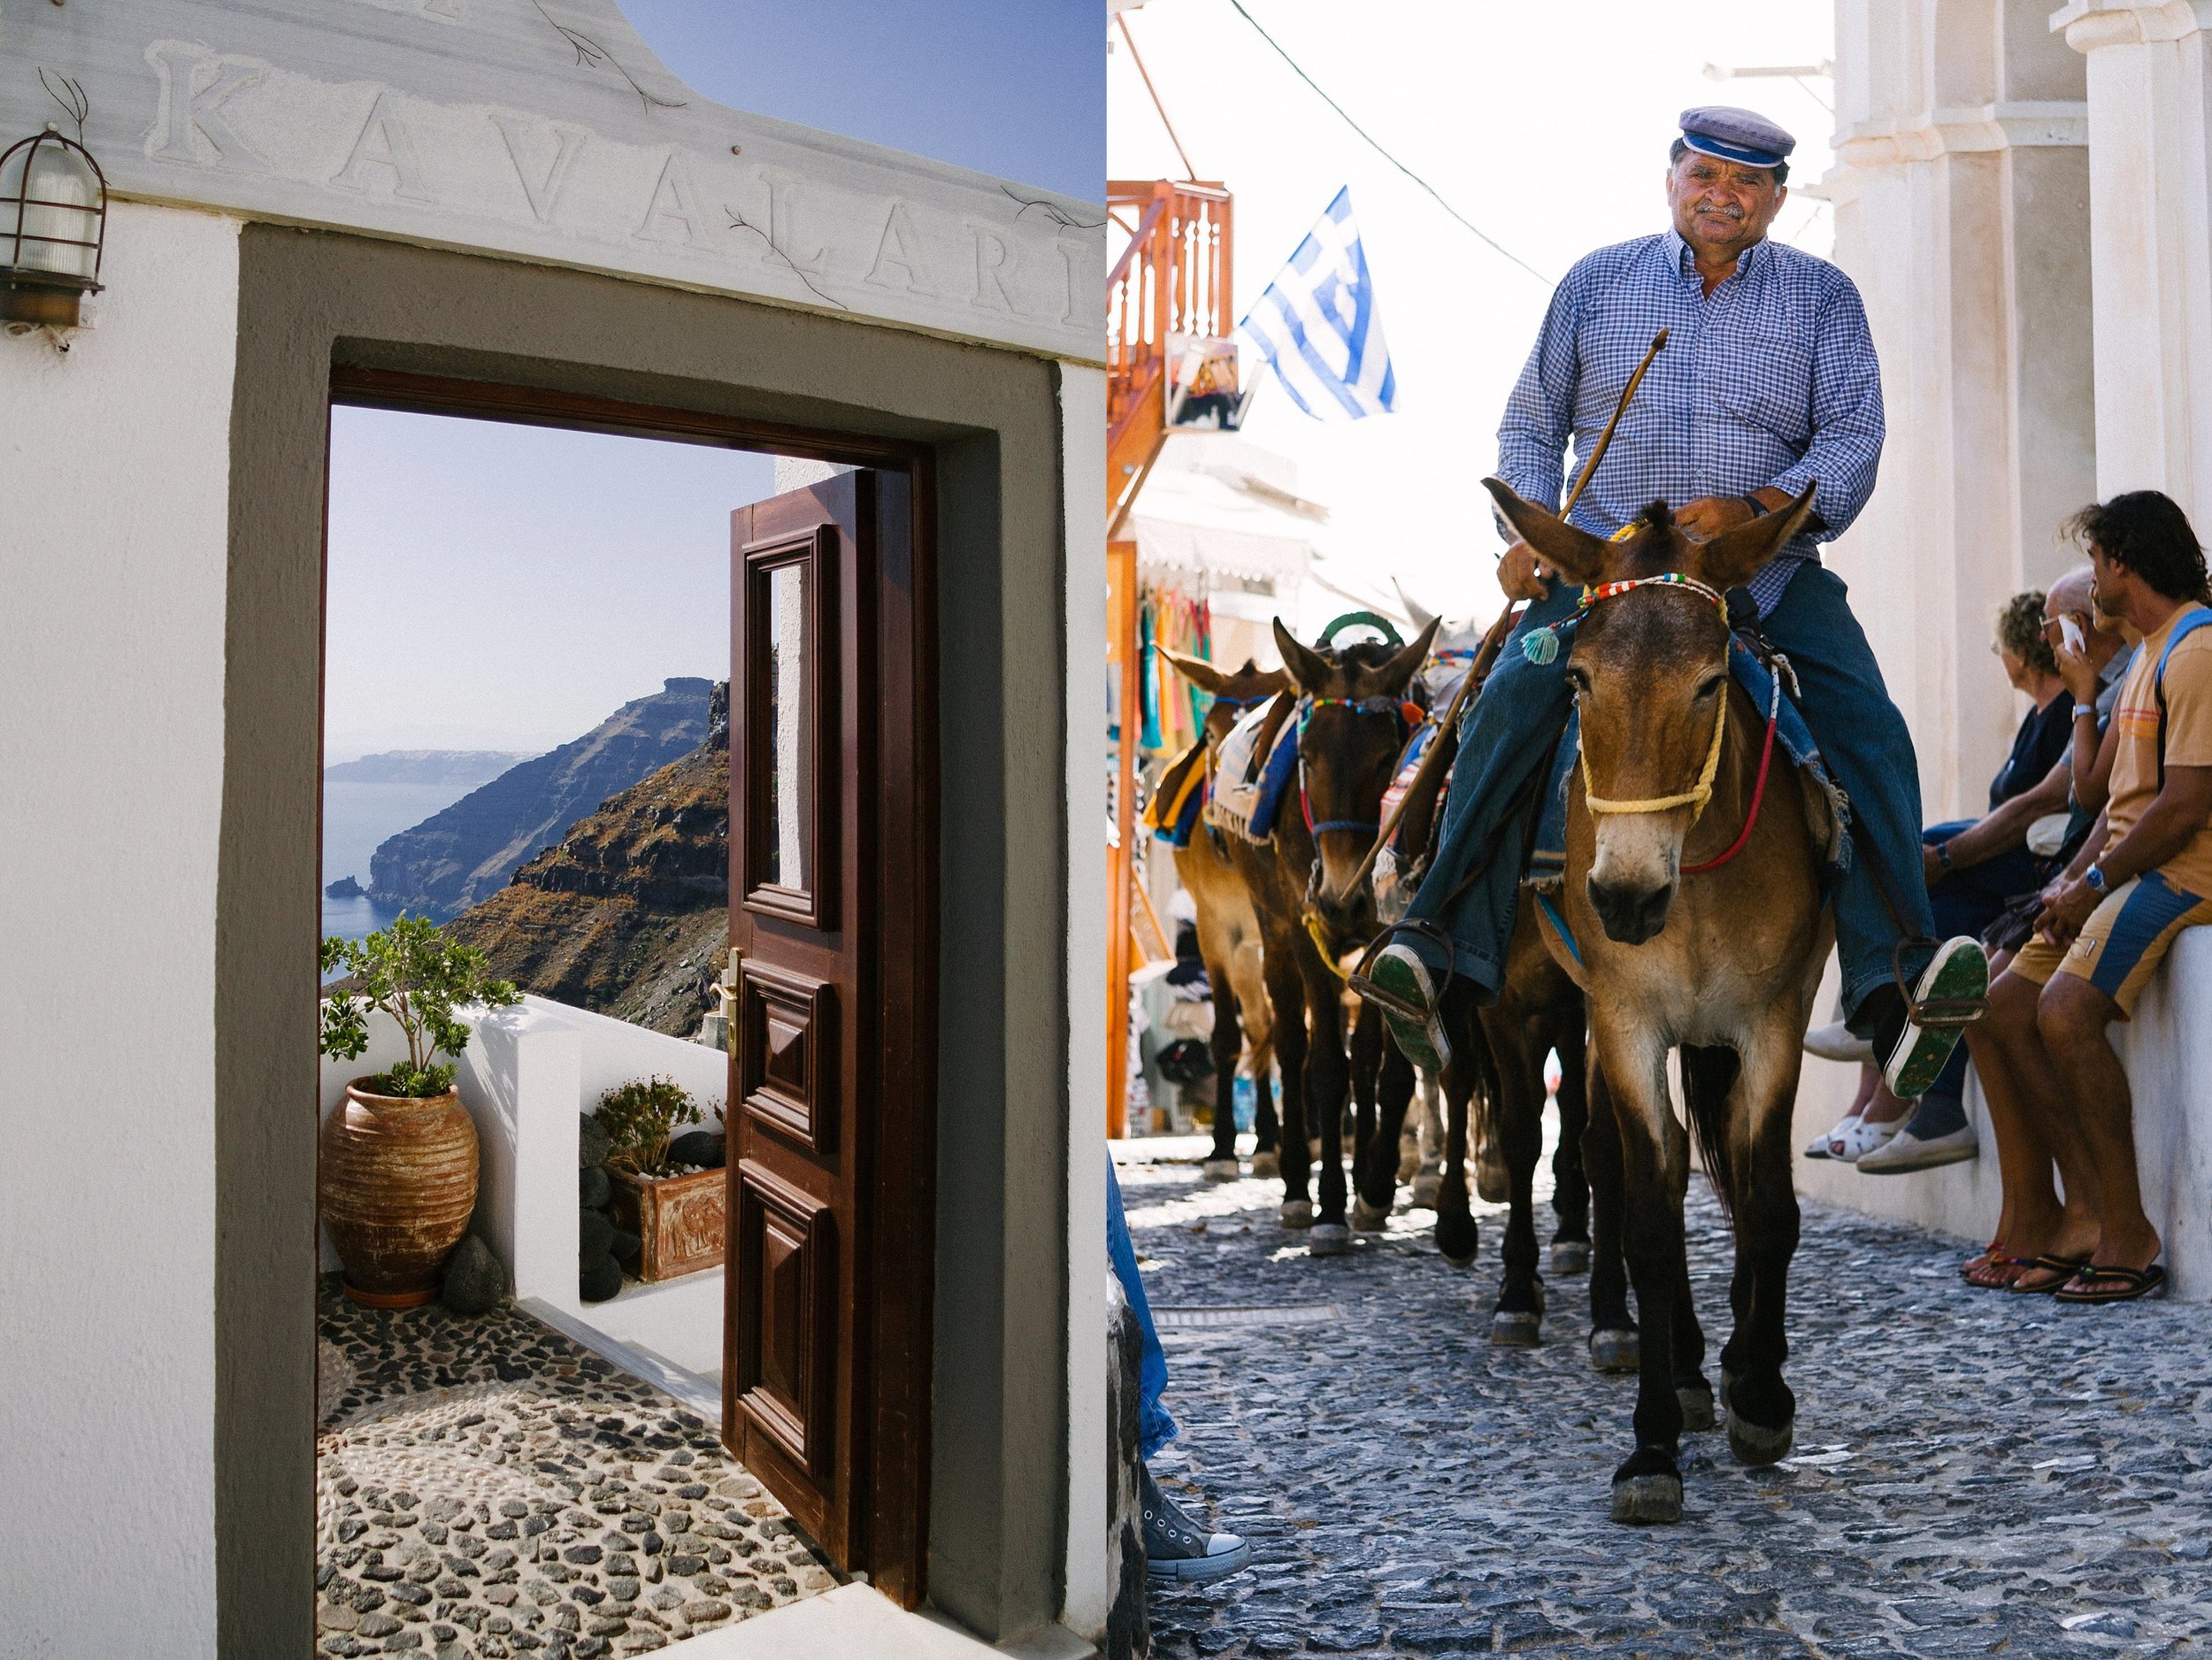  Santorini sights. Doorways and donkeys. 